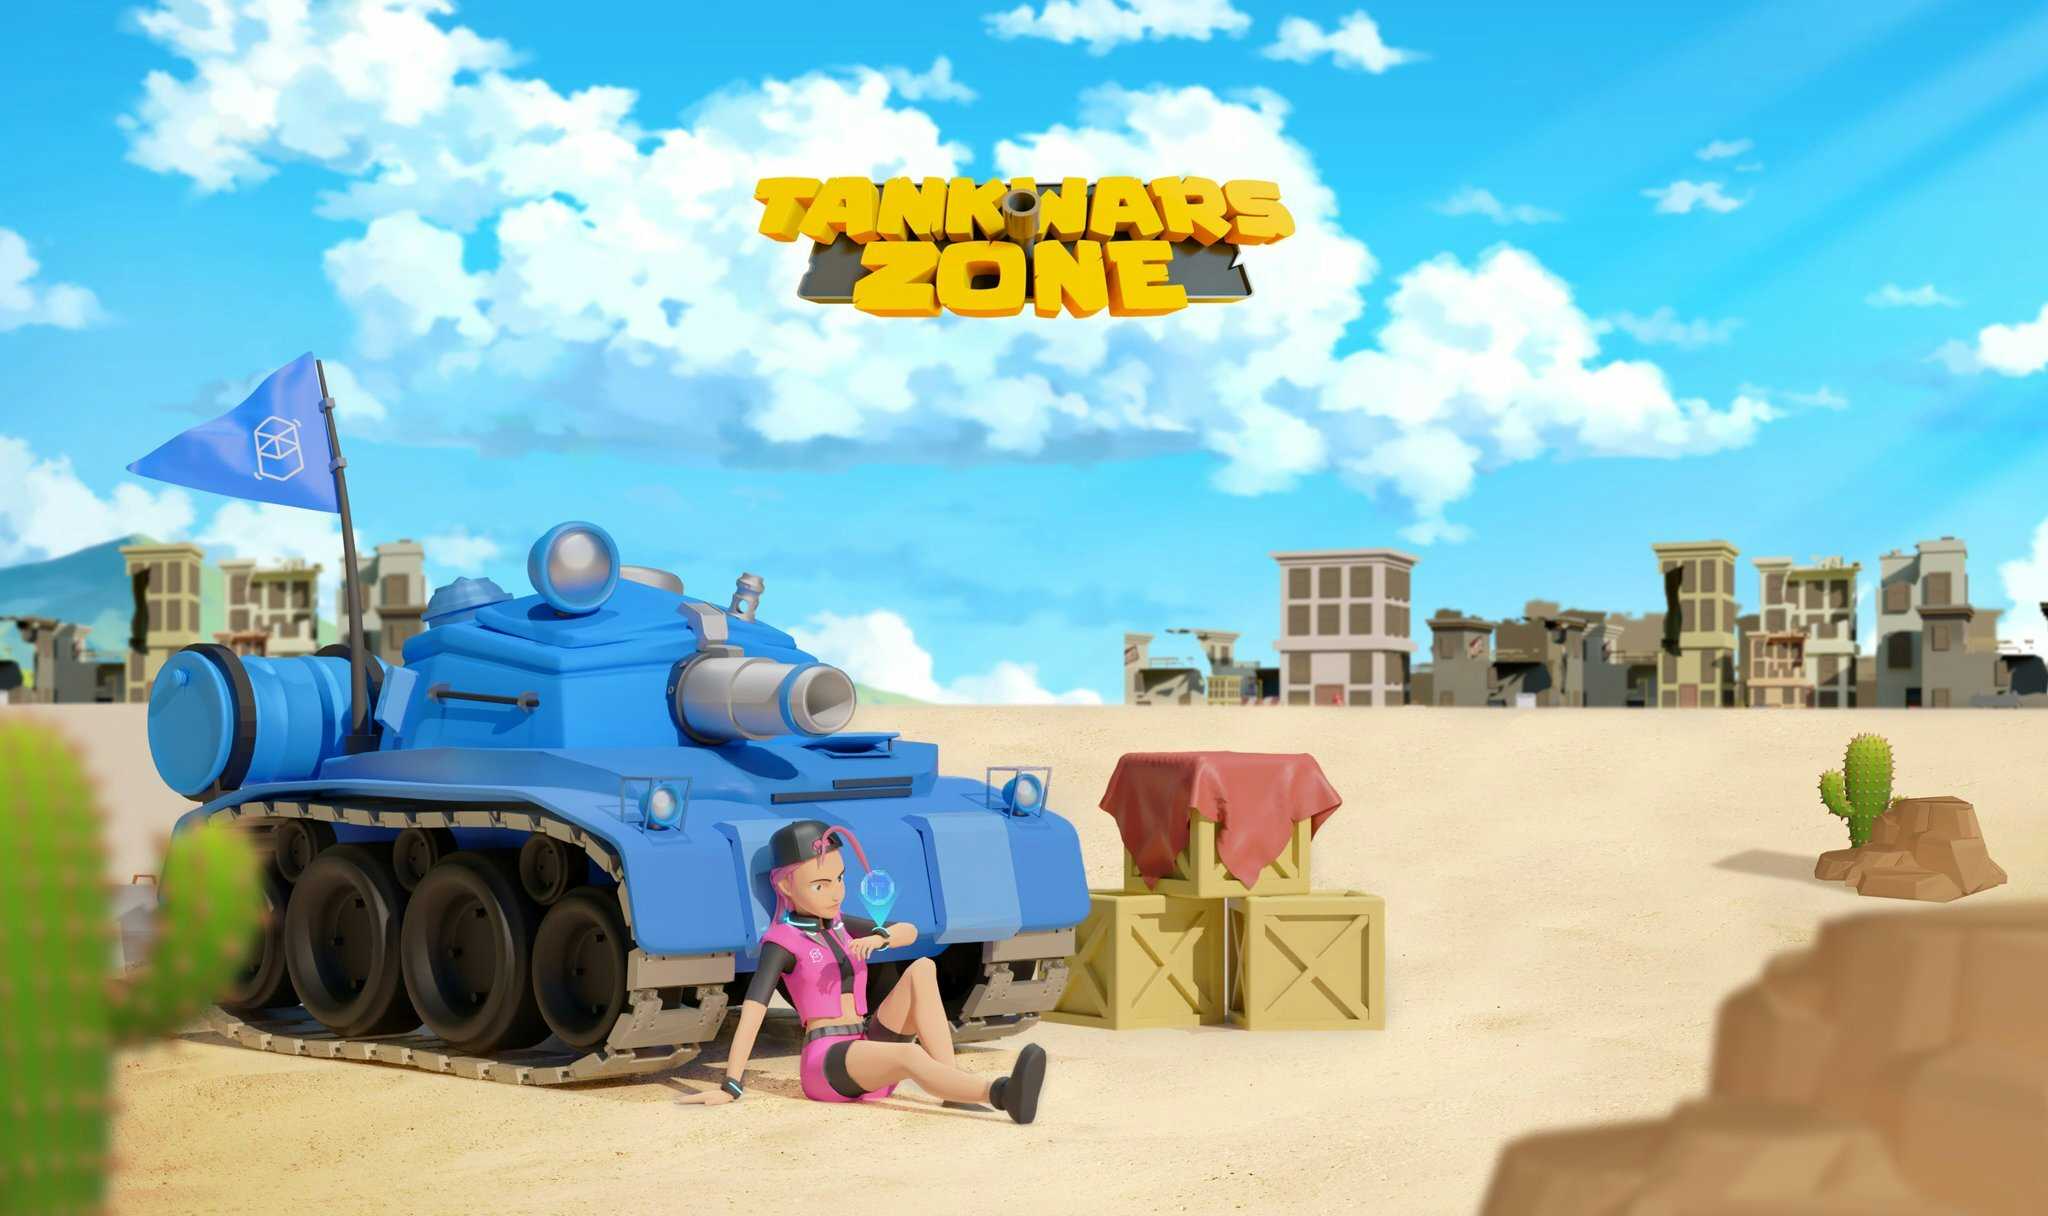 background image of Tank Wars Zone